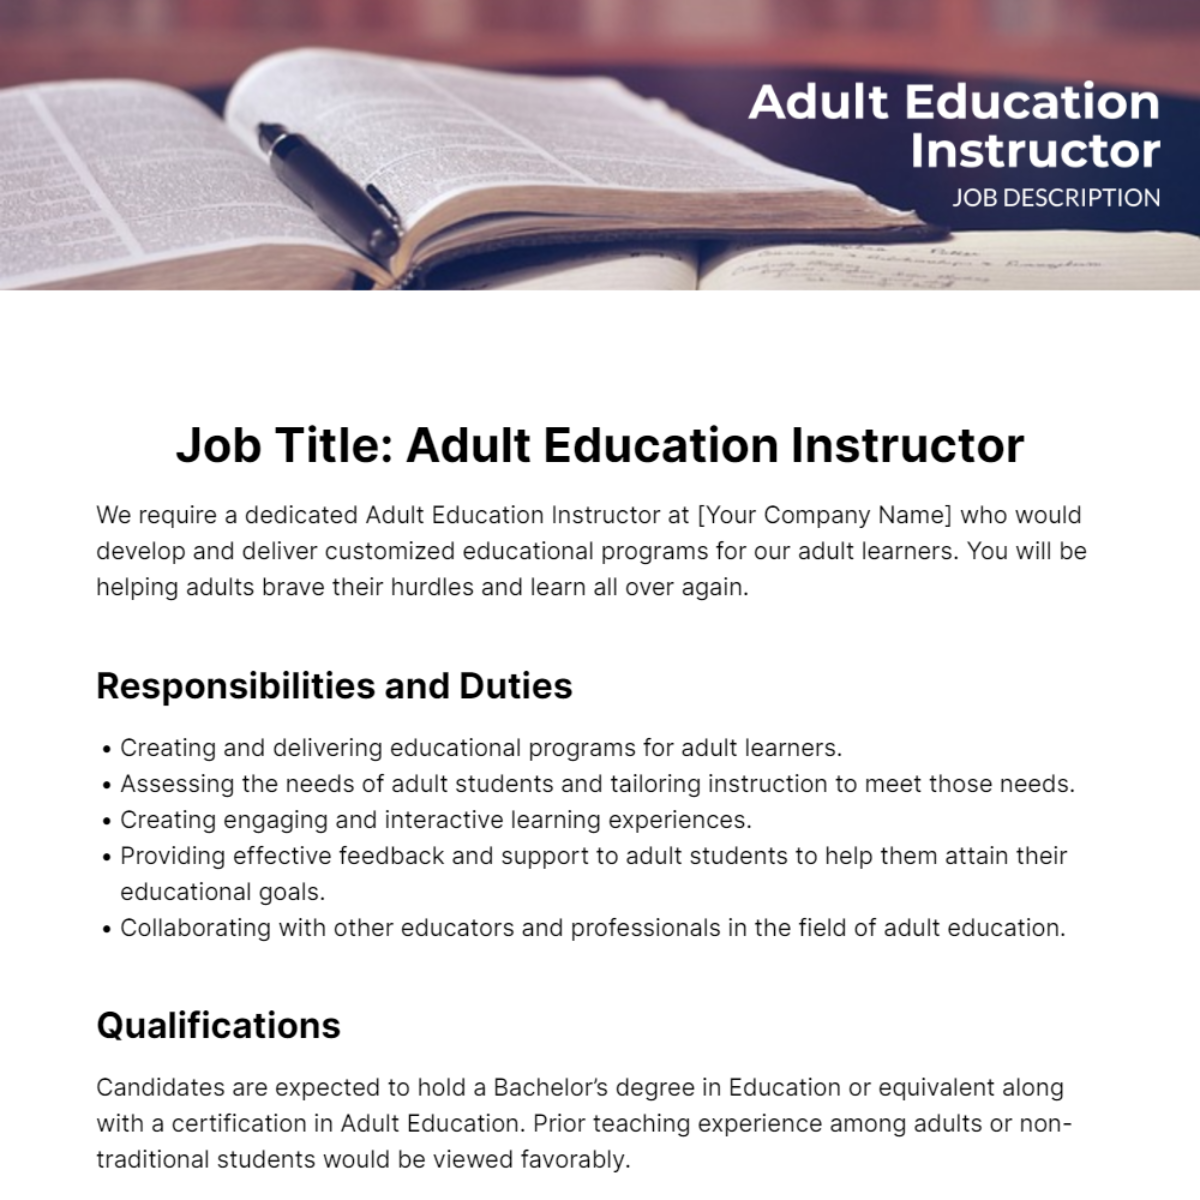 Adult Education Instructor Job Description Template